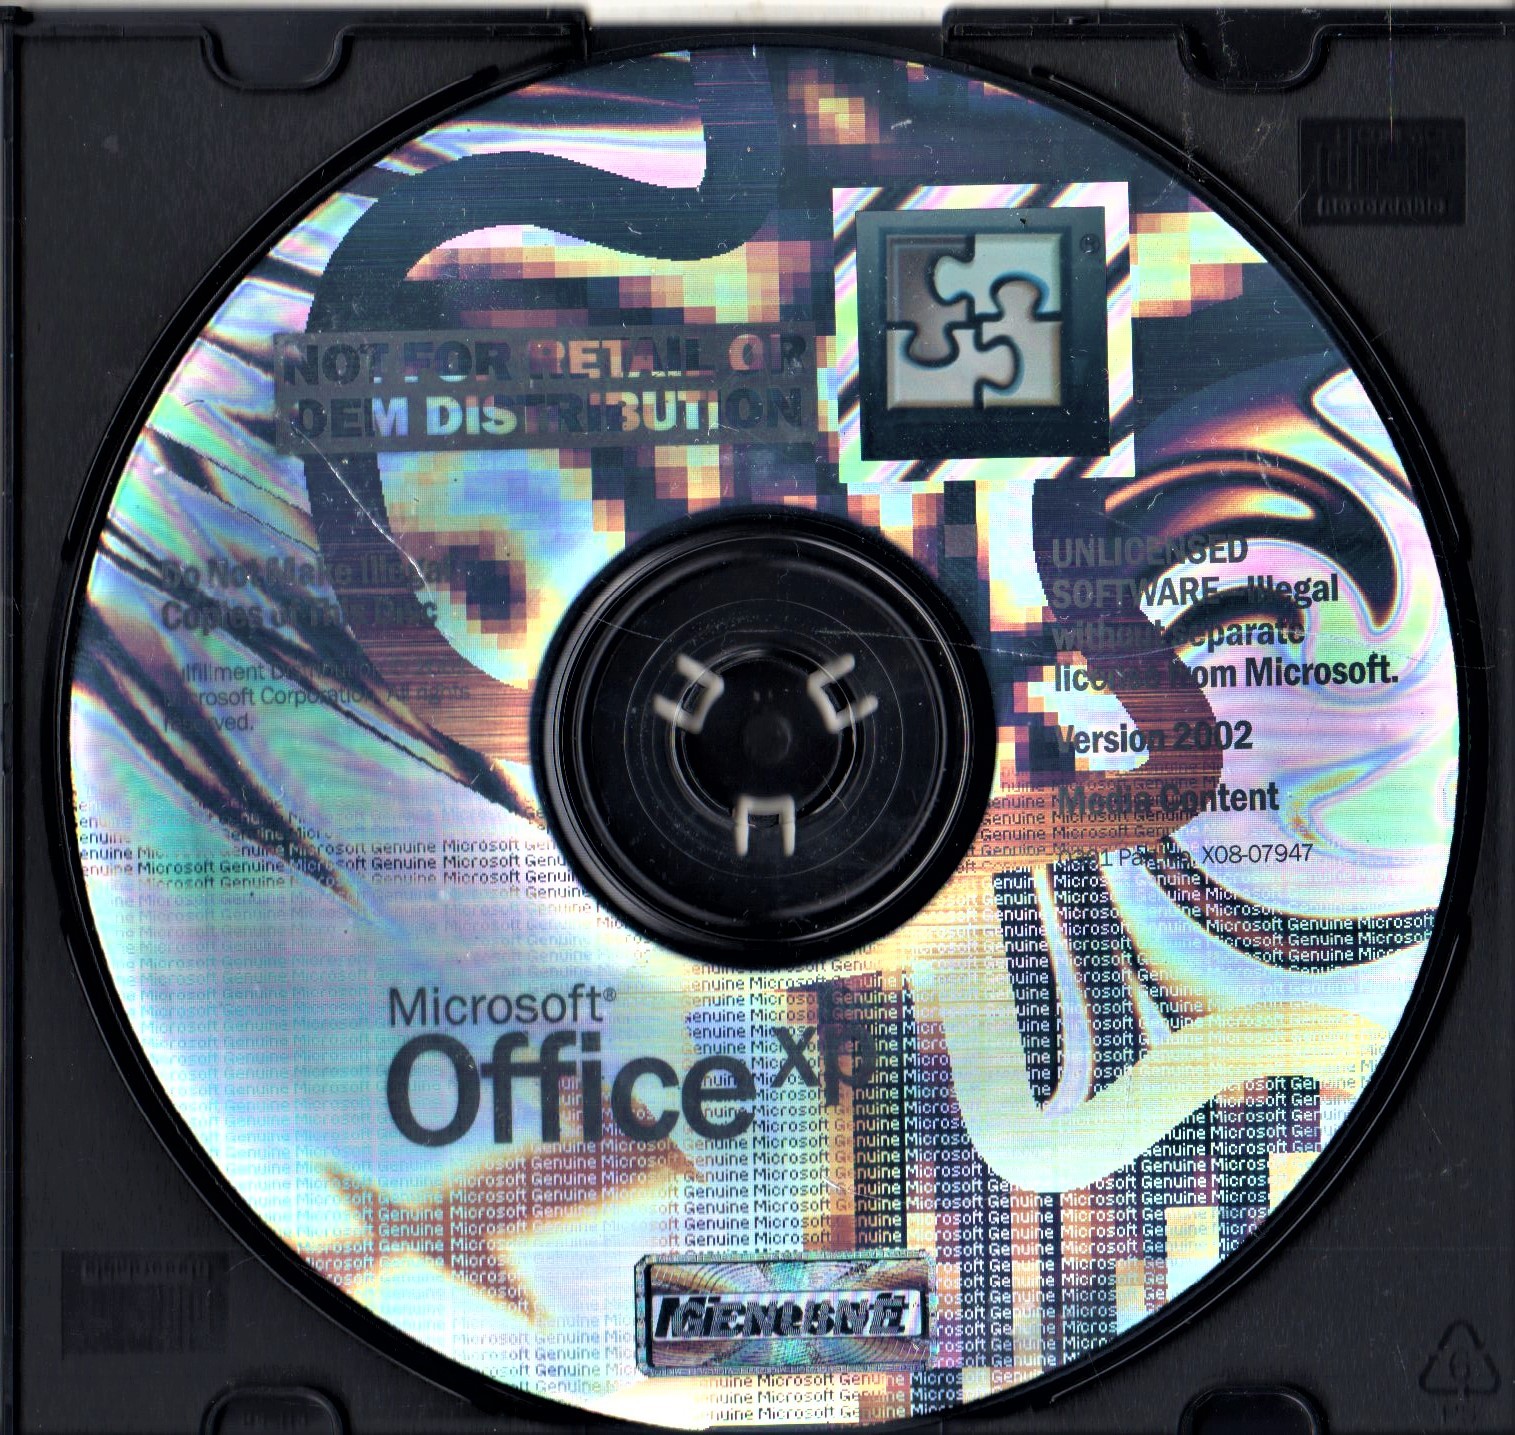 Microsoft Office XP - DVD (2002) - $6.95